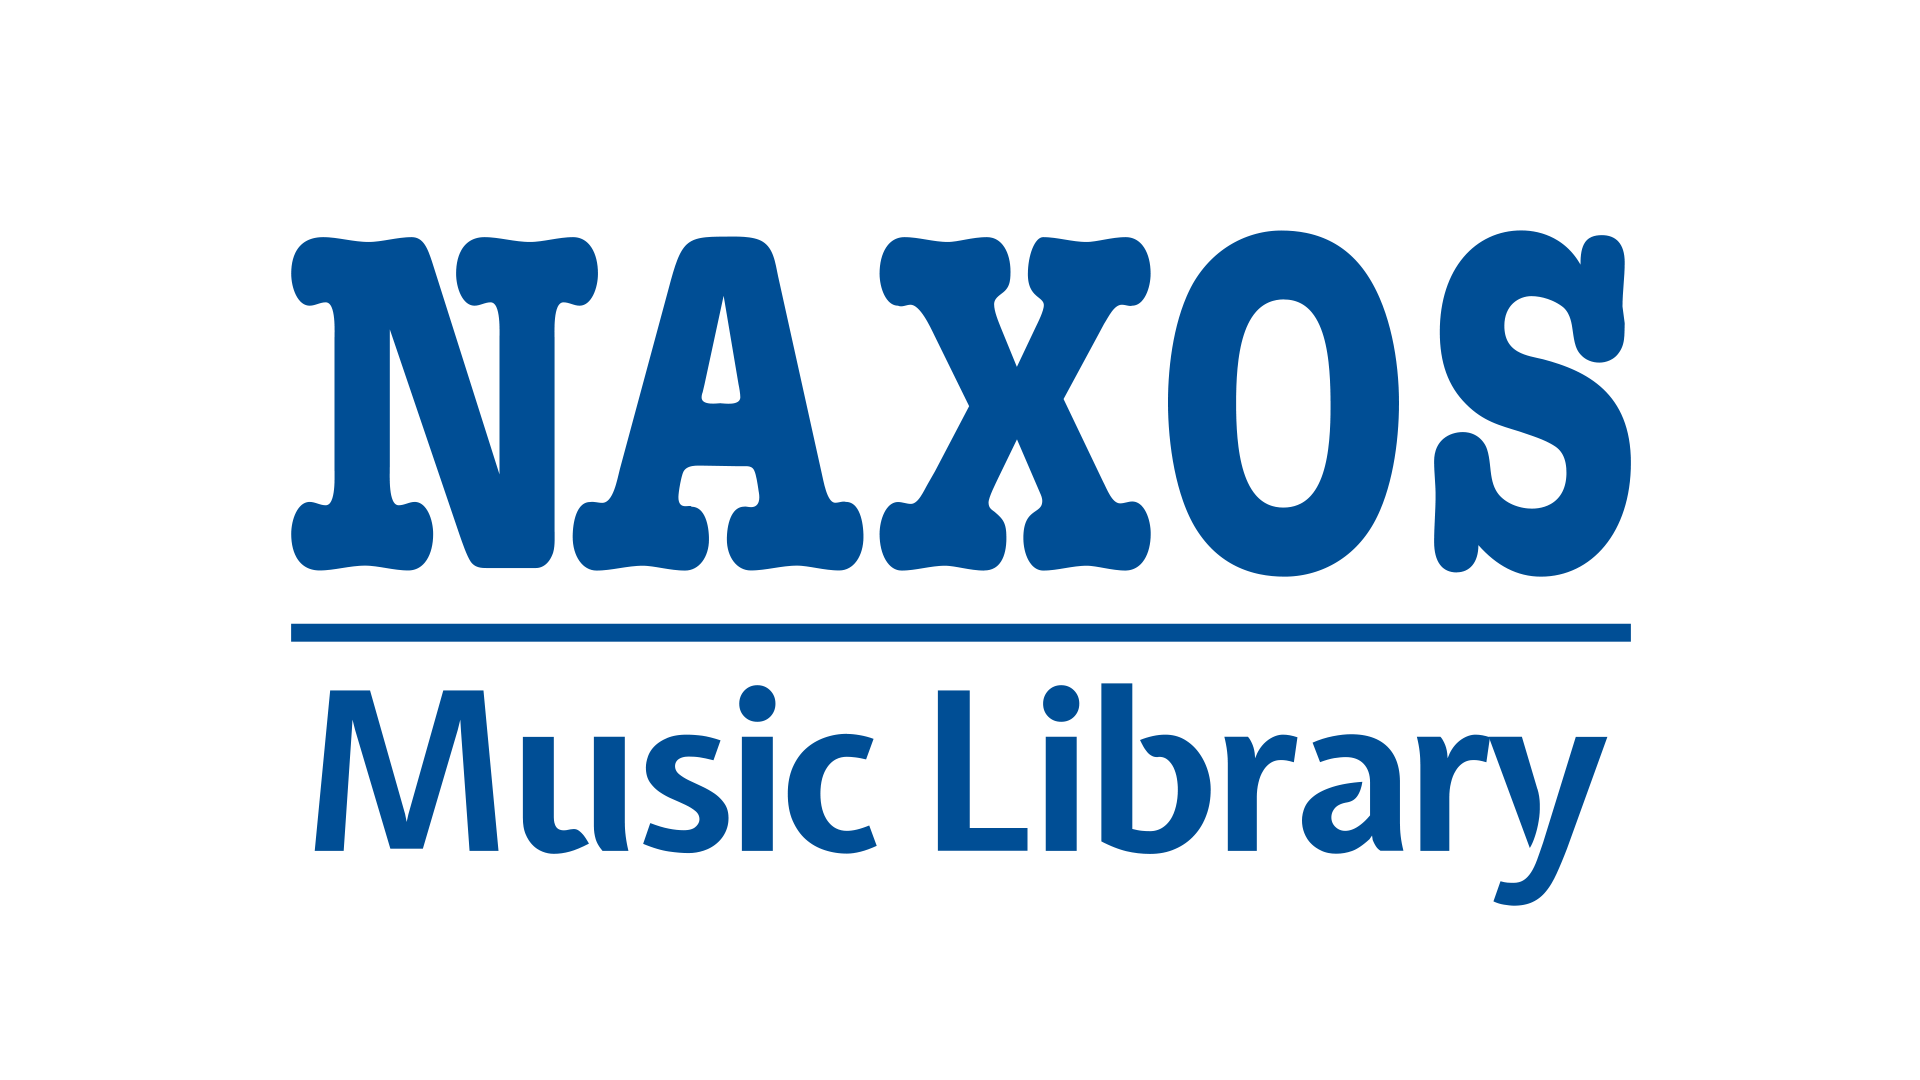 Naxos Music Library logo